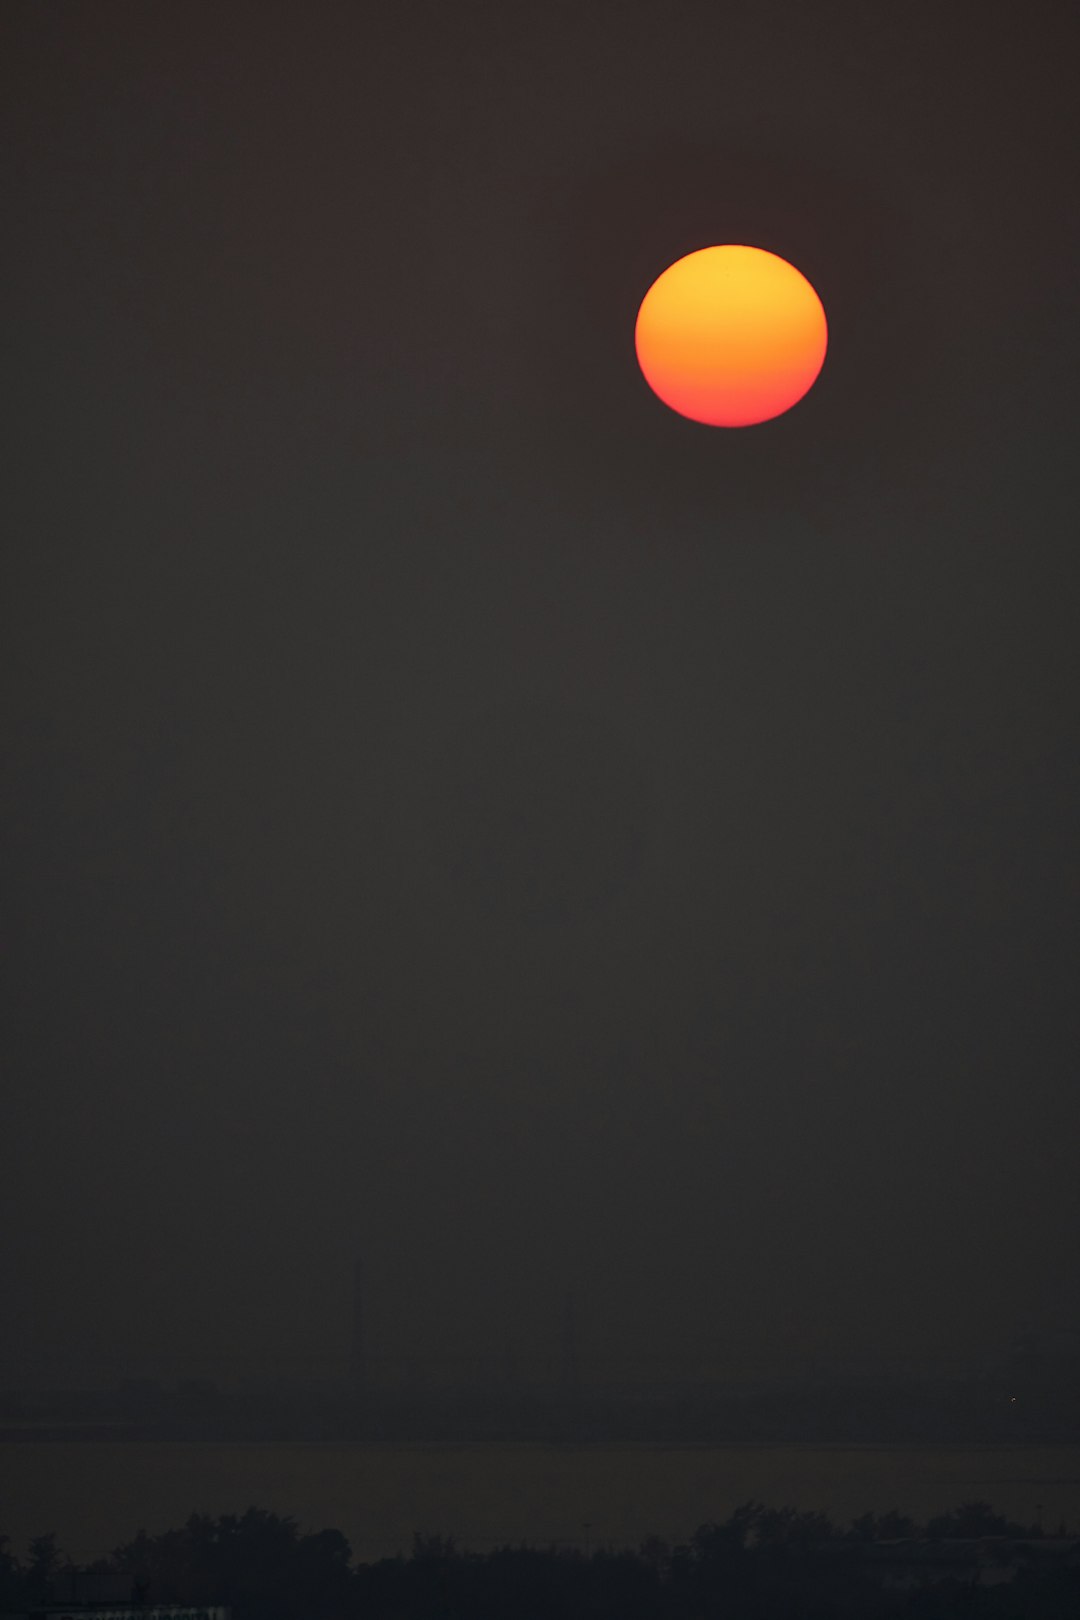 orange round light on black background